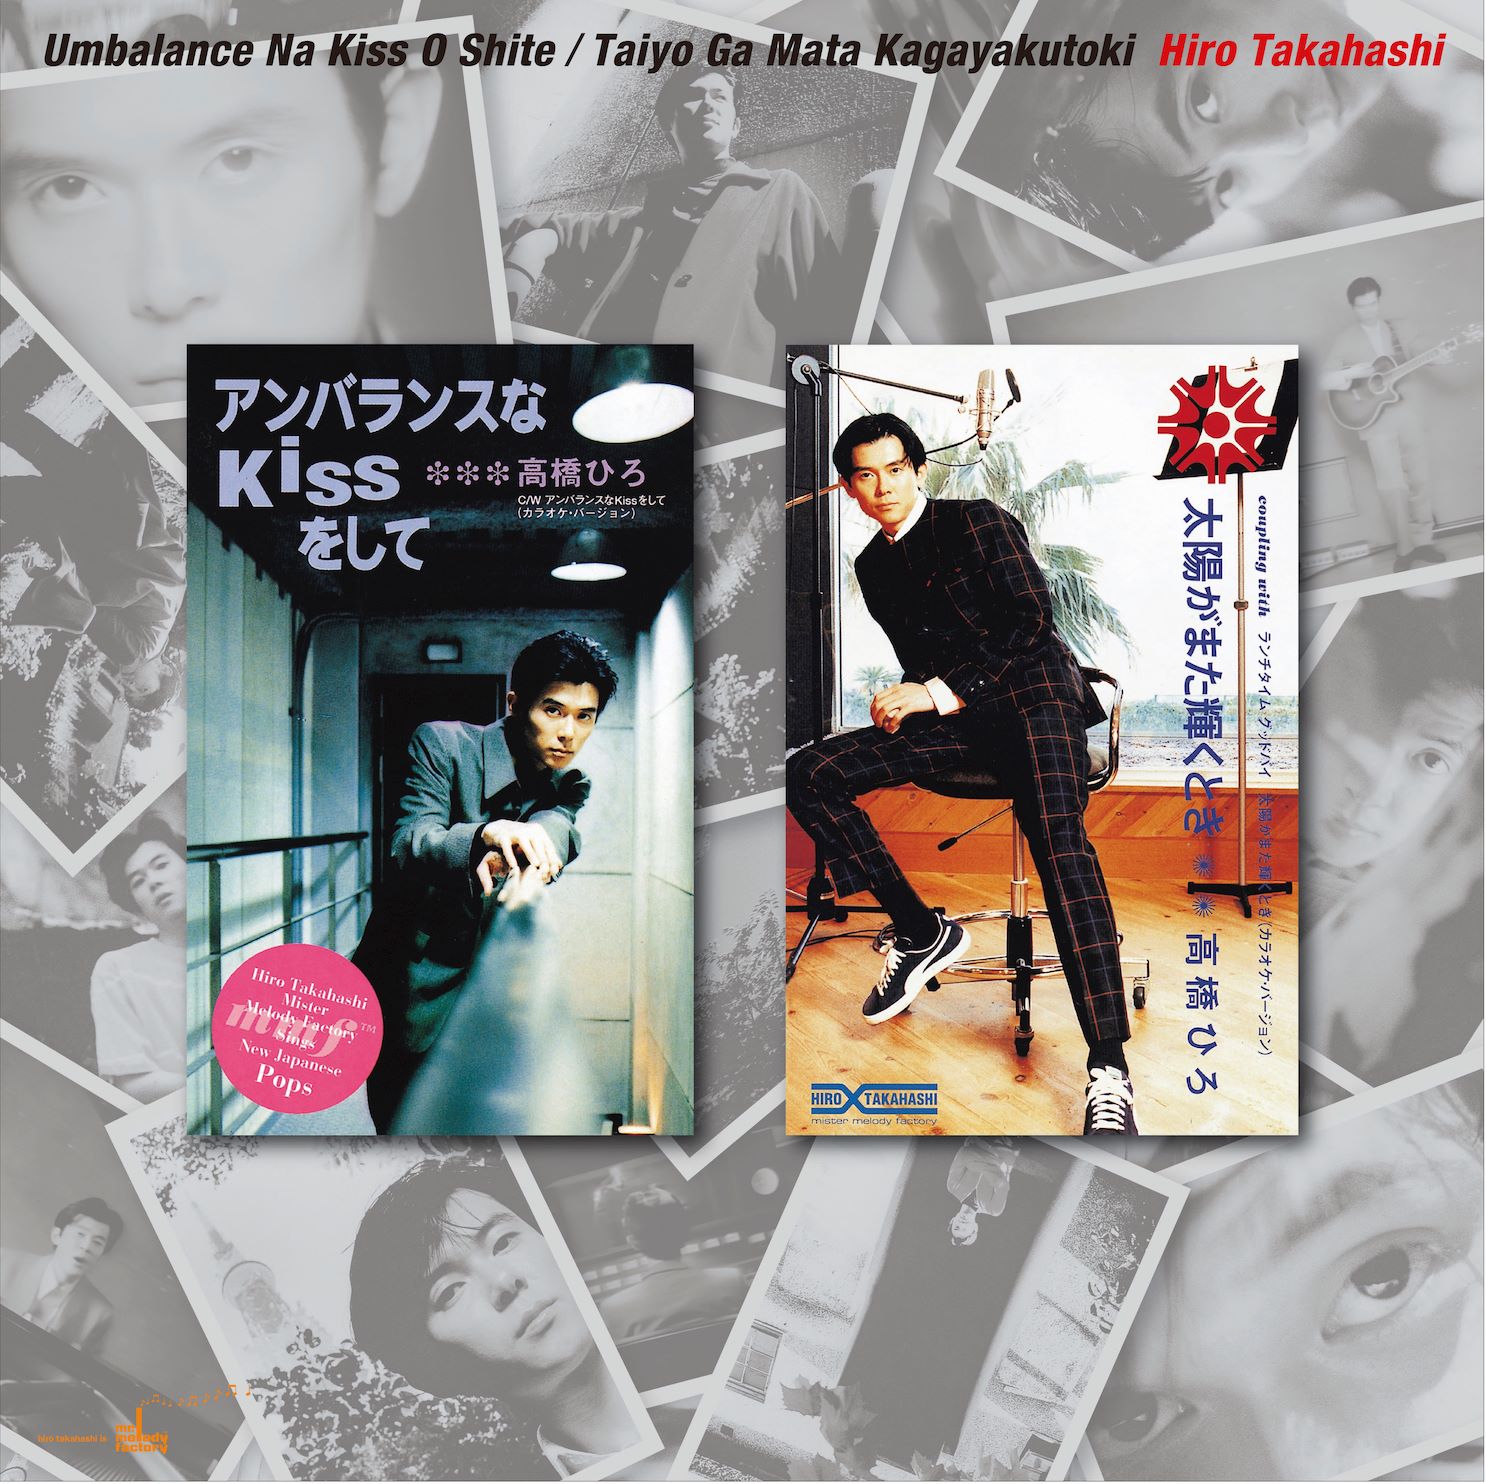 Hiro Takahashi "Unbalance Na Kiss Wo Shite / Taiyou ga Mata Kagayaku Toki" (Vinyl) Release on April, 20th